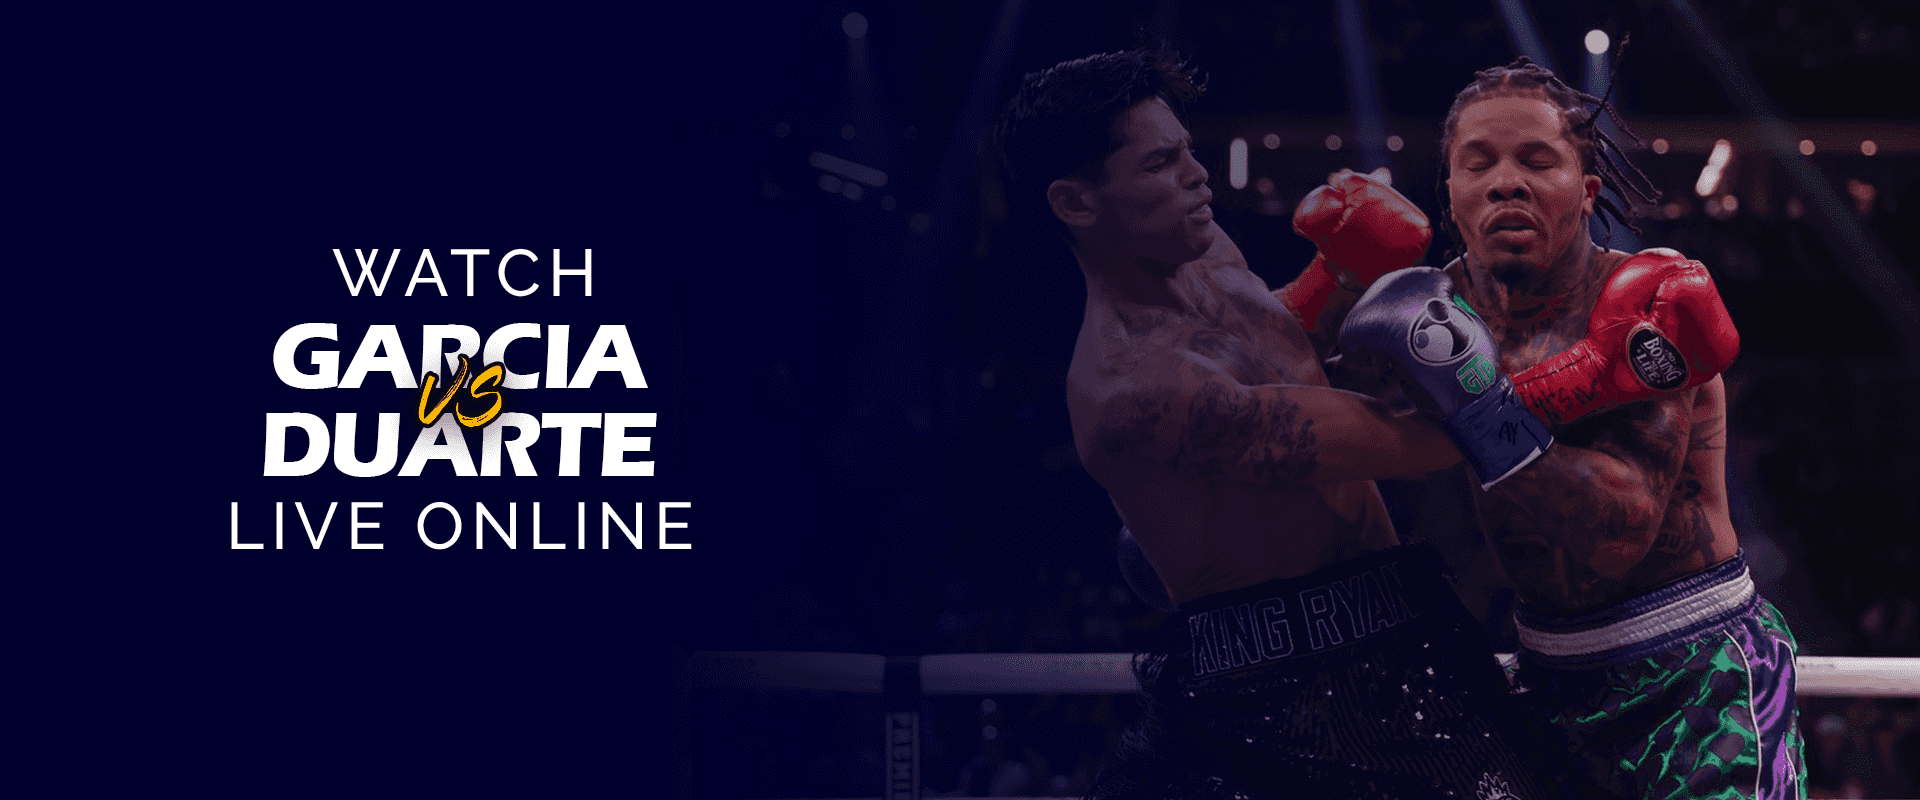 Watch Ryan Garcia vs. Oscar Duarte Live Online